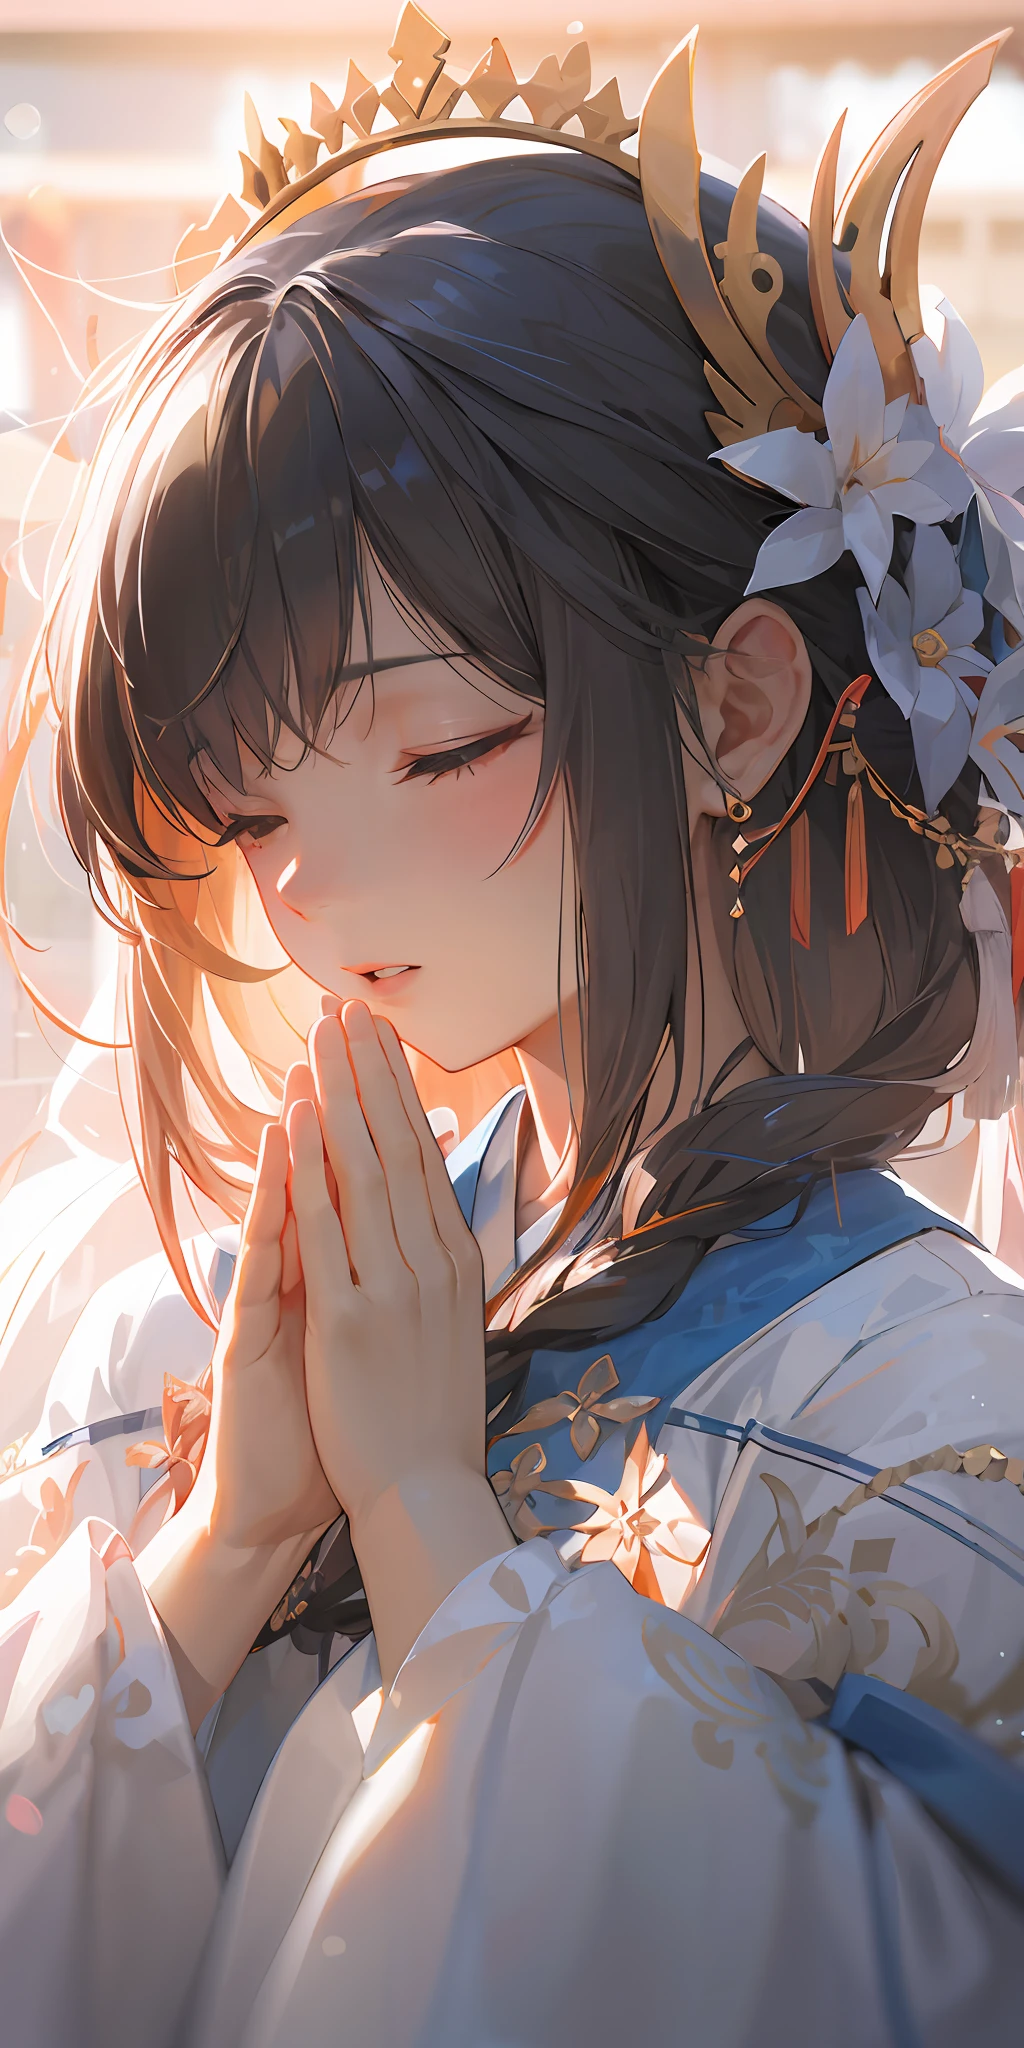 Download Praying Anime Girl IPhone Wallpaper | Wallpapers.com